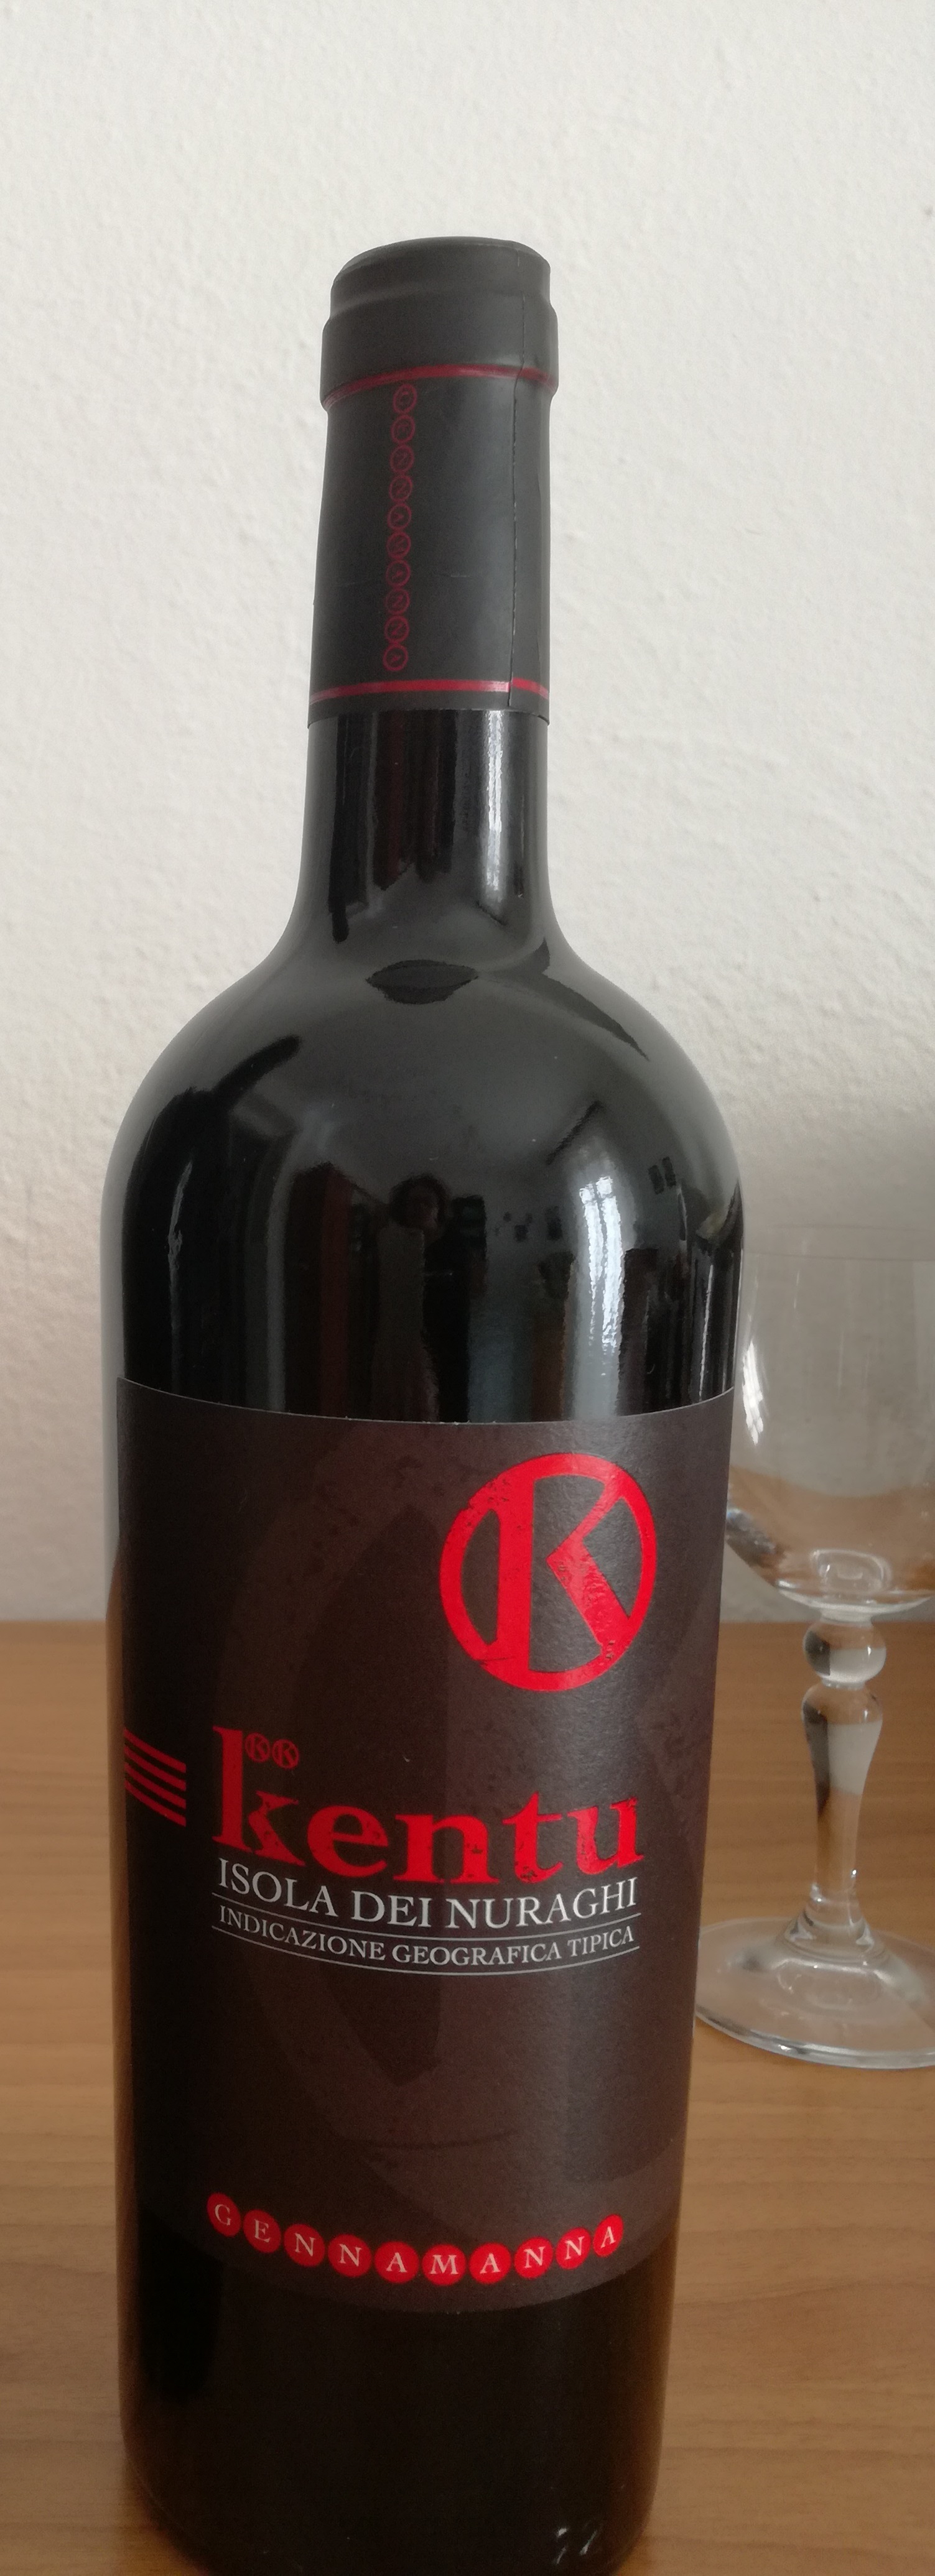 Gennamanna - Kentu Vino rosso superiore - Kentu superior red wine